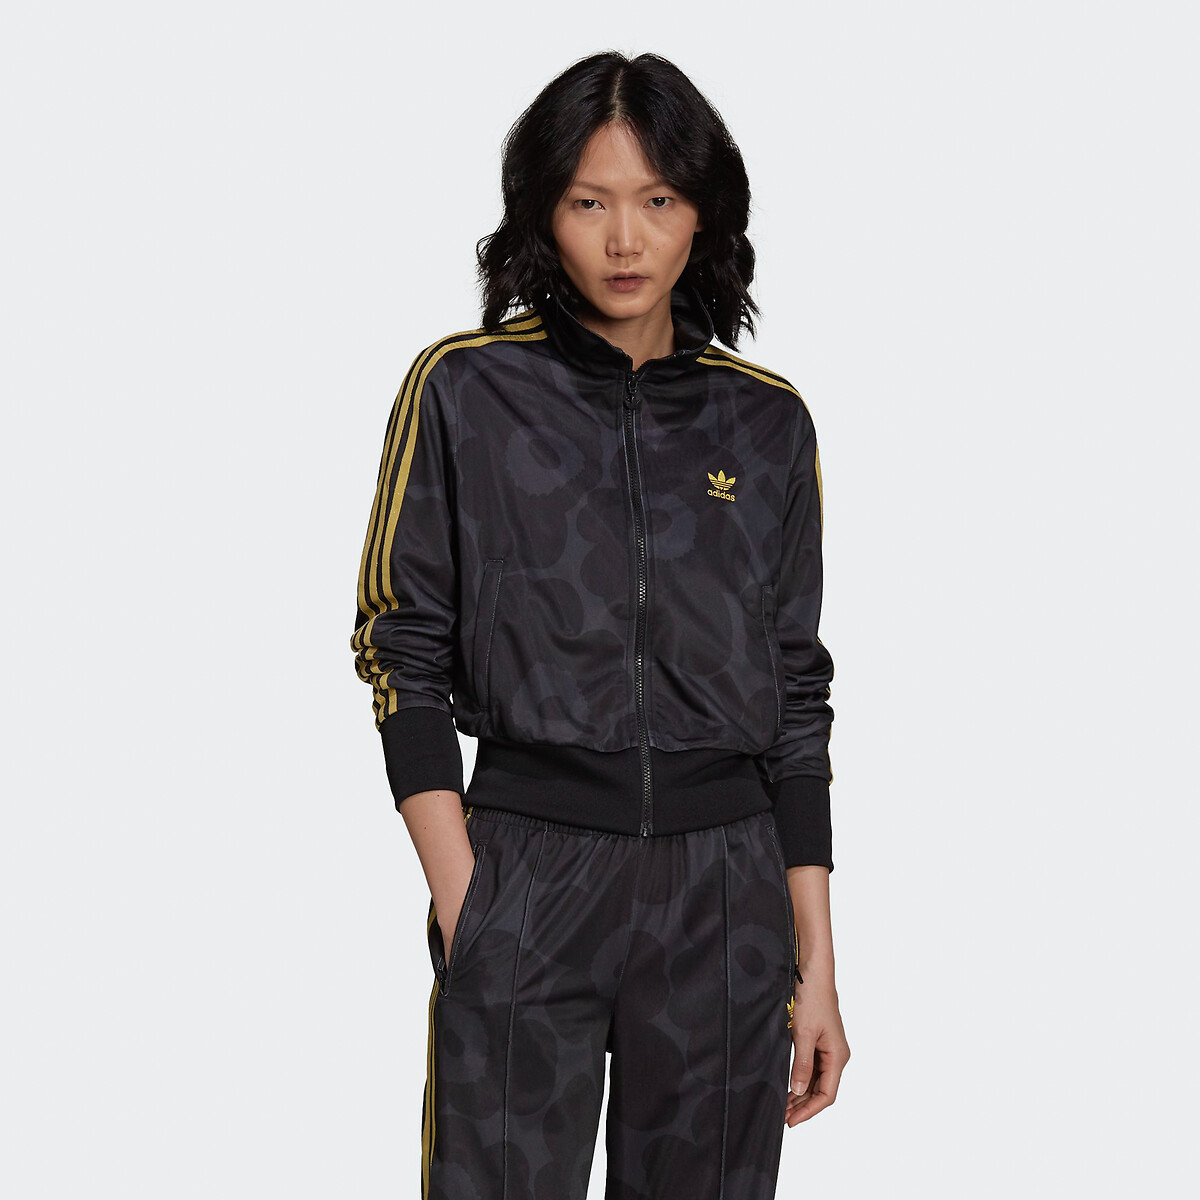 Floral zip-up jacket with high neck , black, Adidas Originals | La Redoute